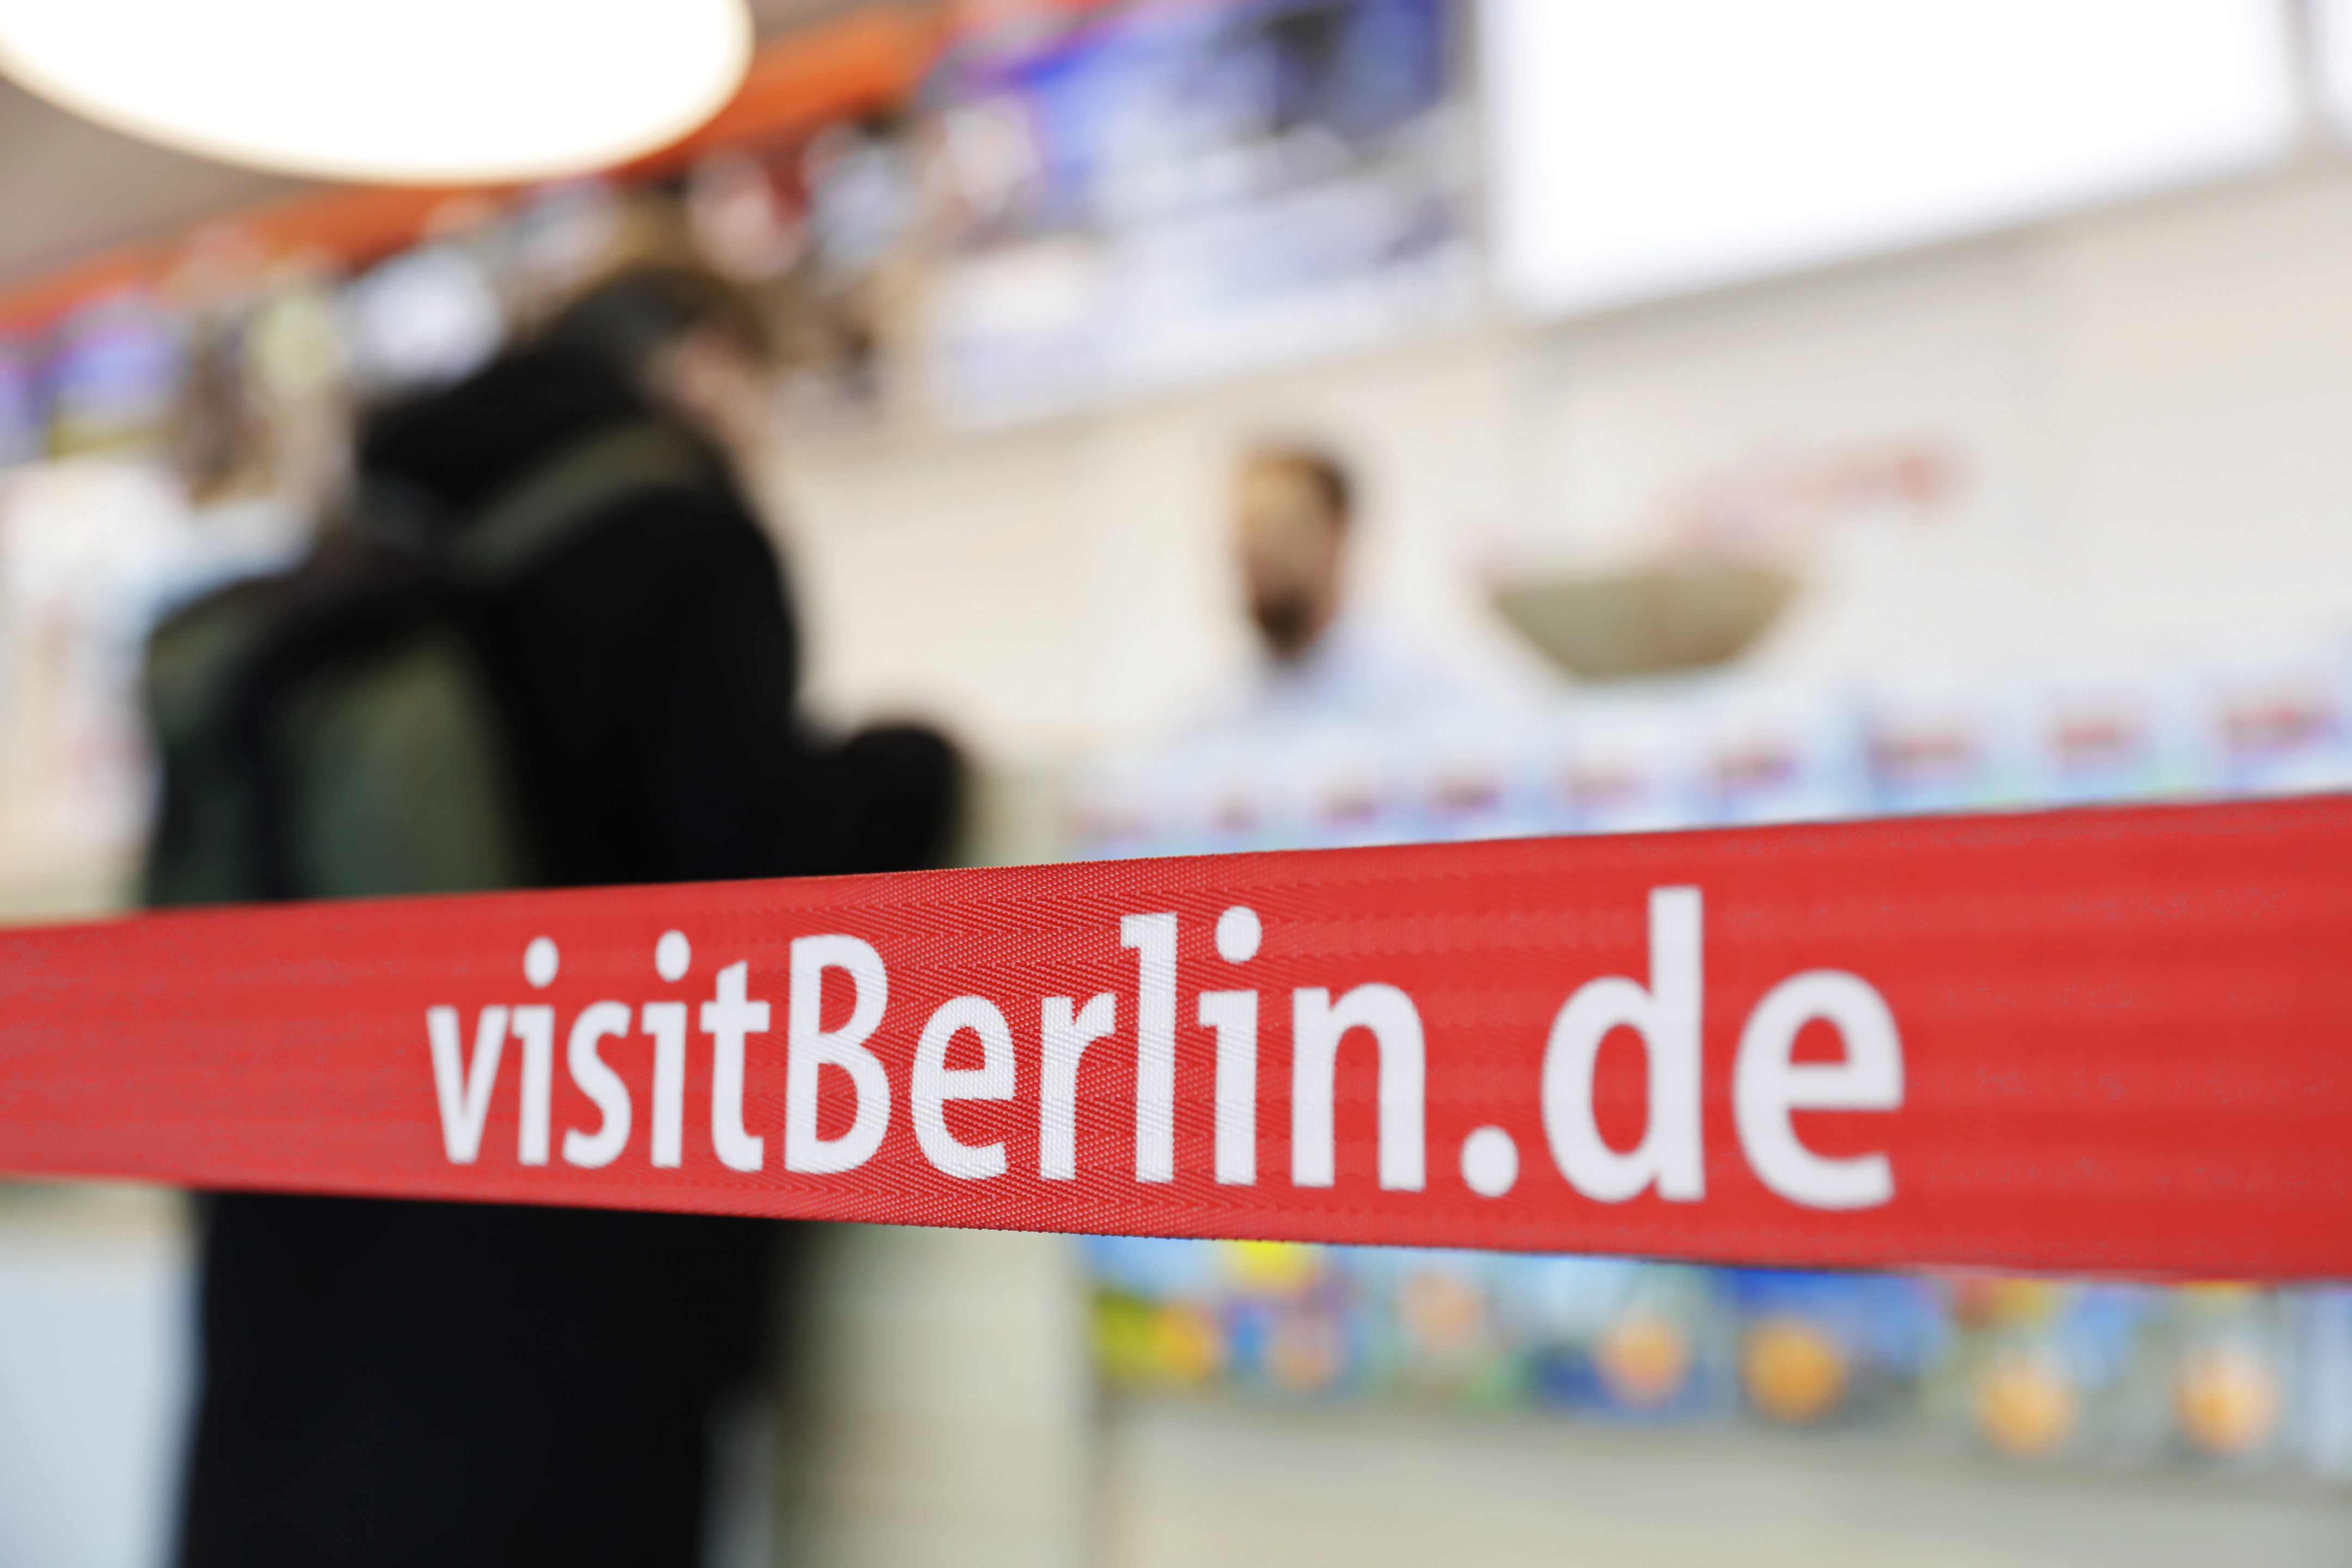 berlin tourist info im hauptbahnhof